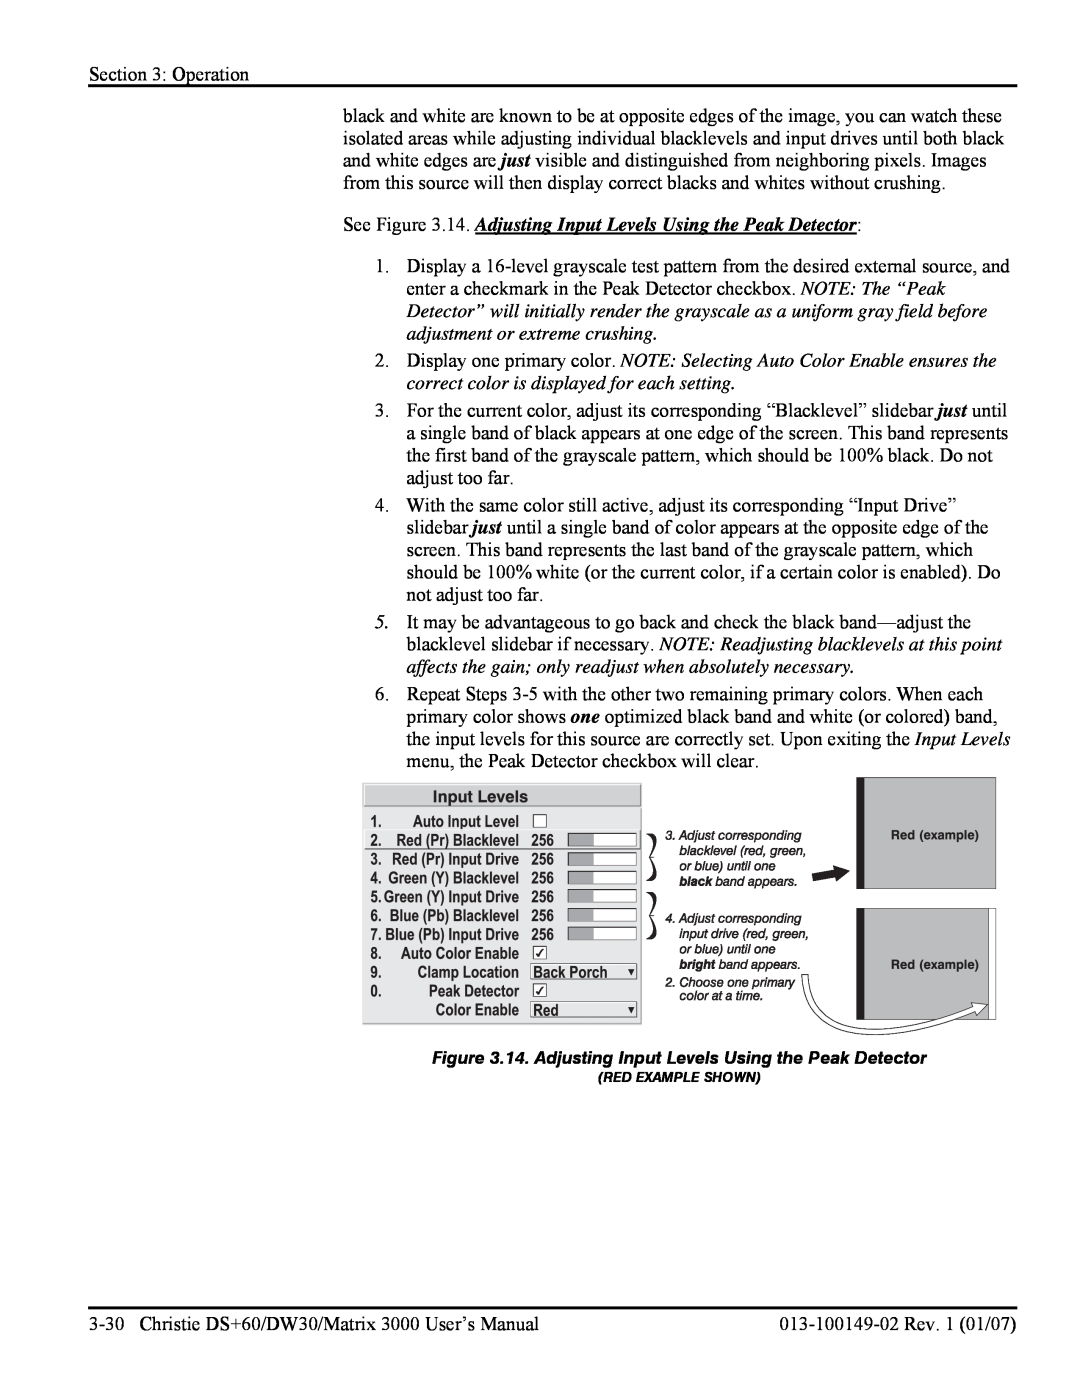 Texas Instruments DW30, MATRIX 3000 user manual See .14. Adjusting Input Levels Using the Peak Detector 